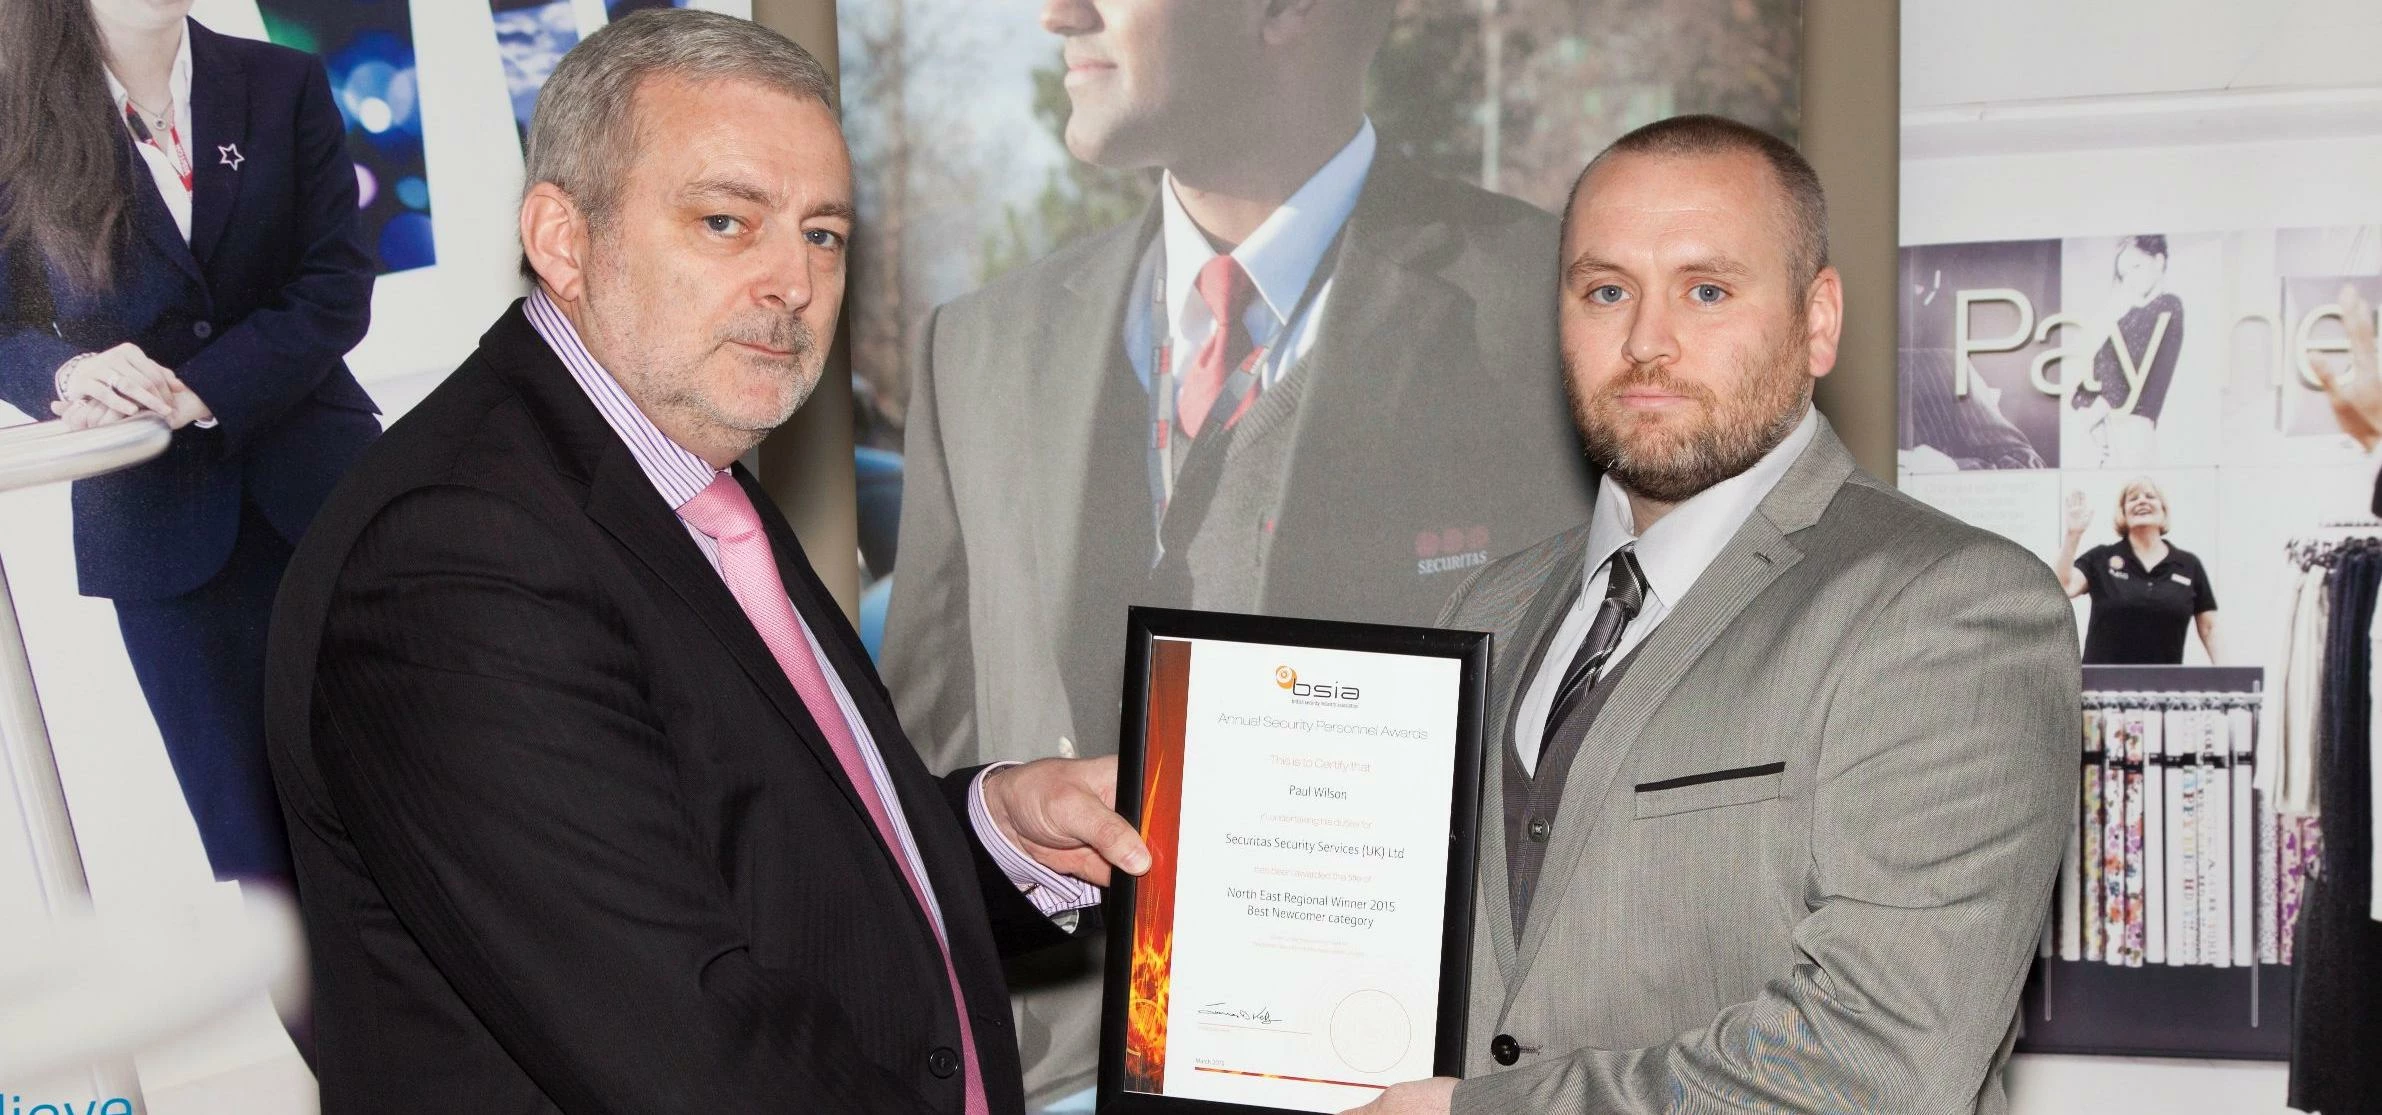 Paul (right) receives his award from BSIA Director, Trevor Elliot